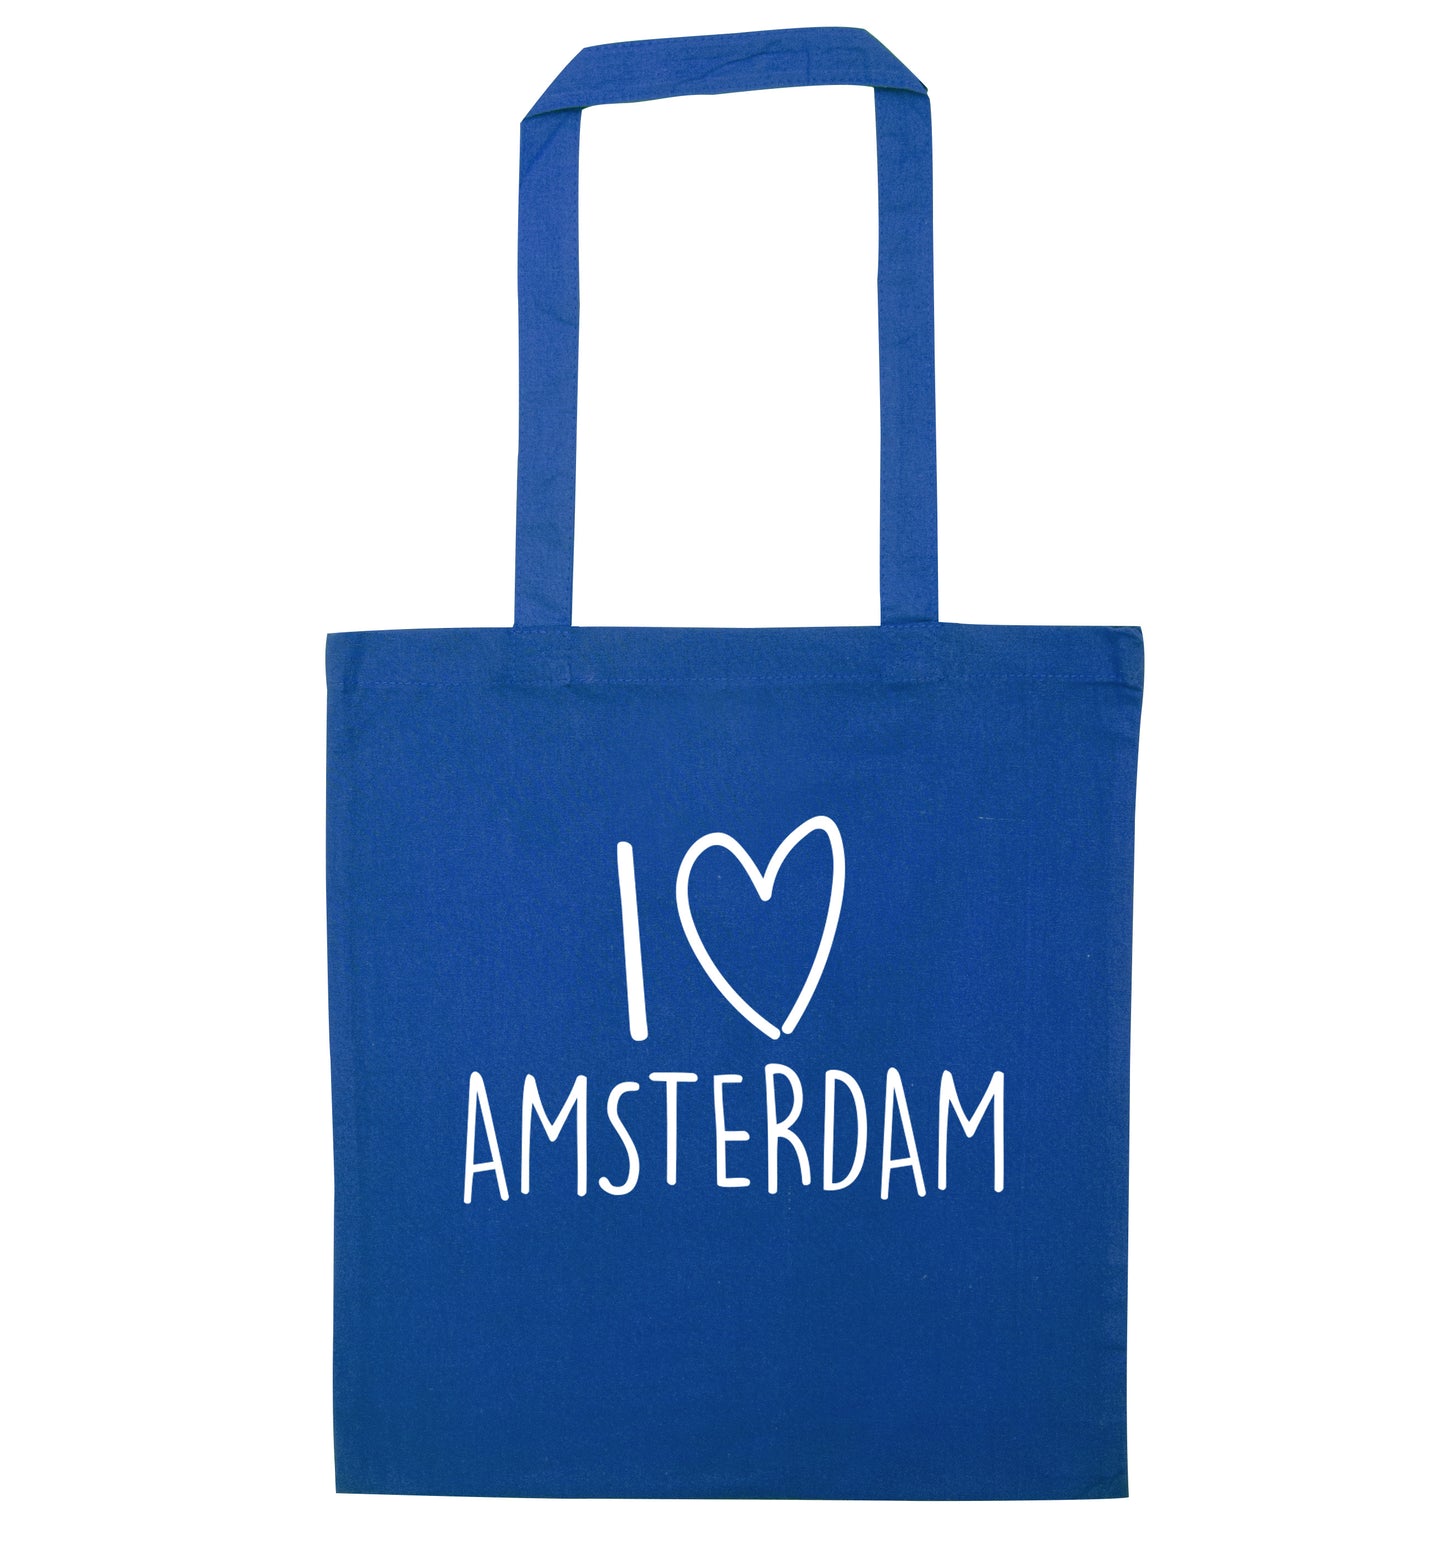 I love Amsterdam blue tote bag